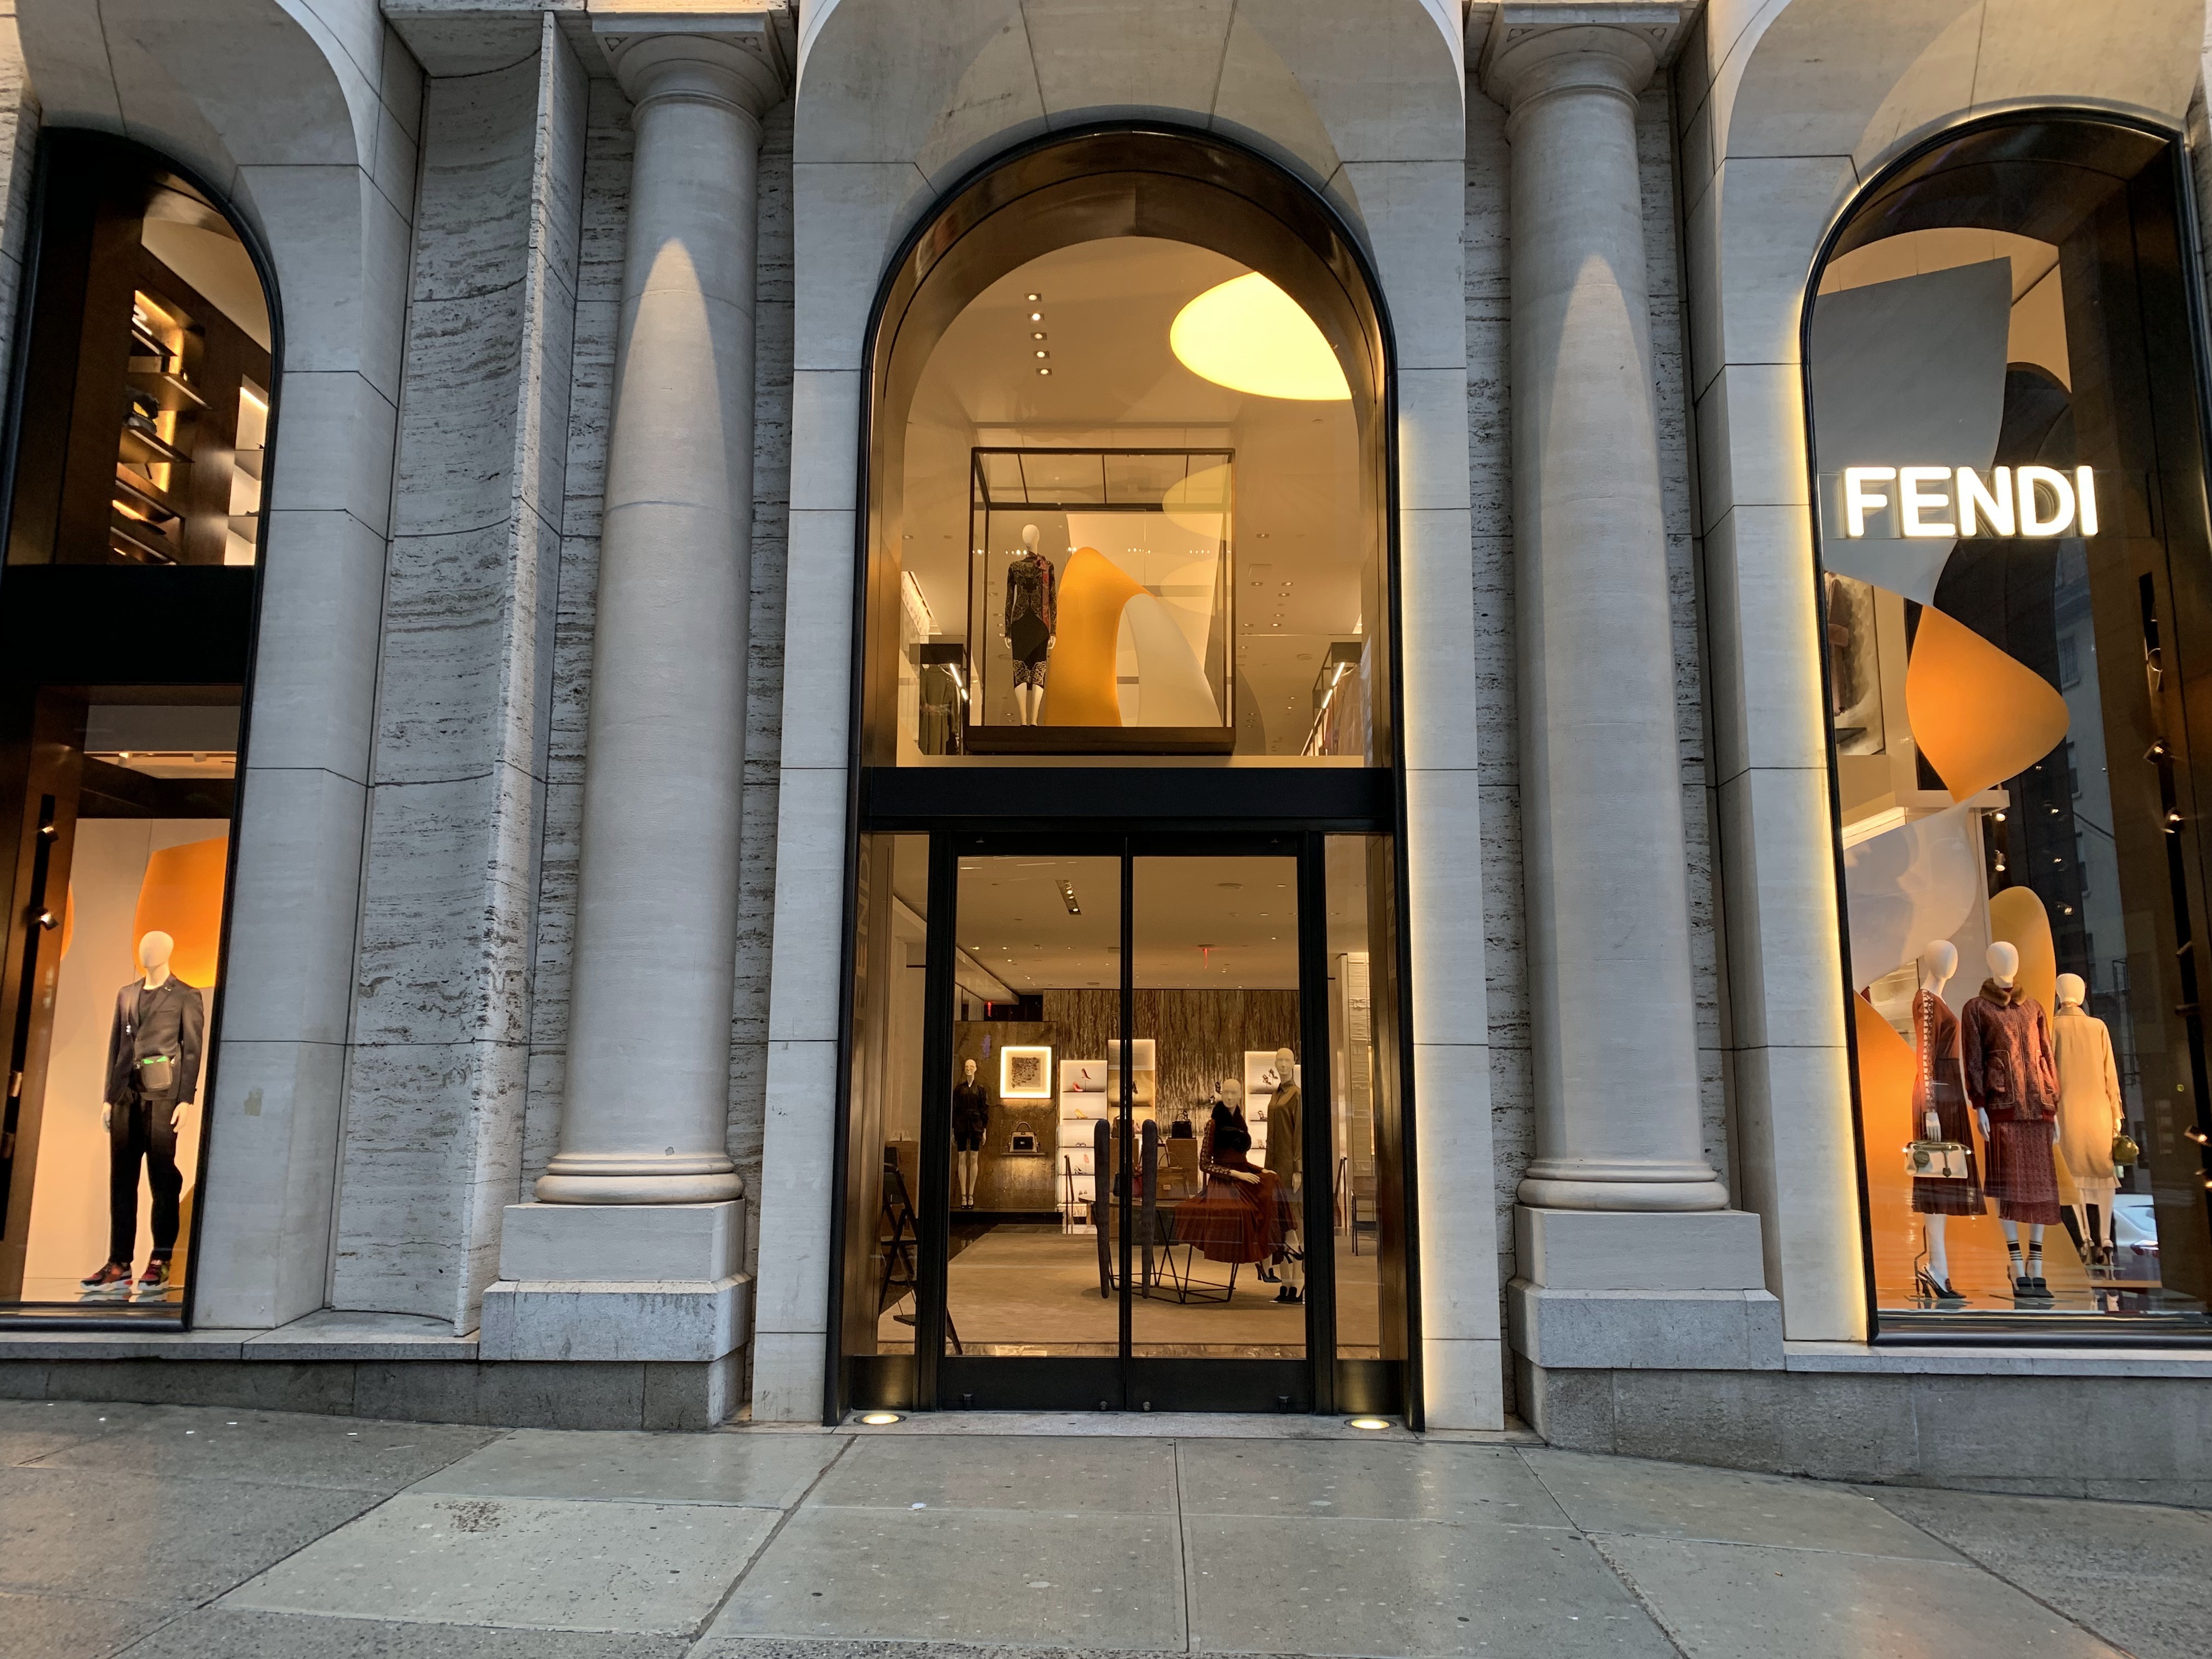 Fendi Window Display, New May 2019